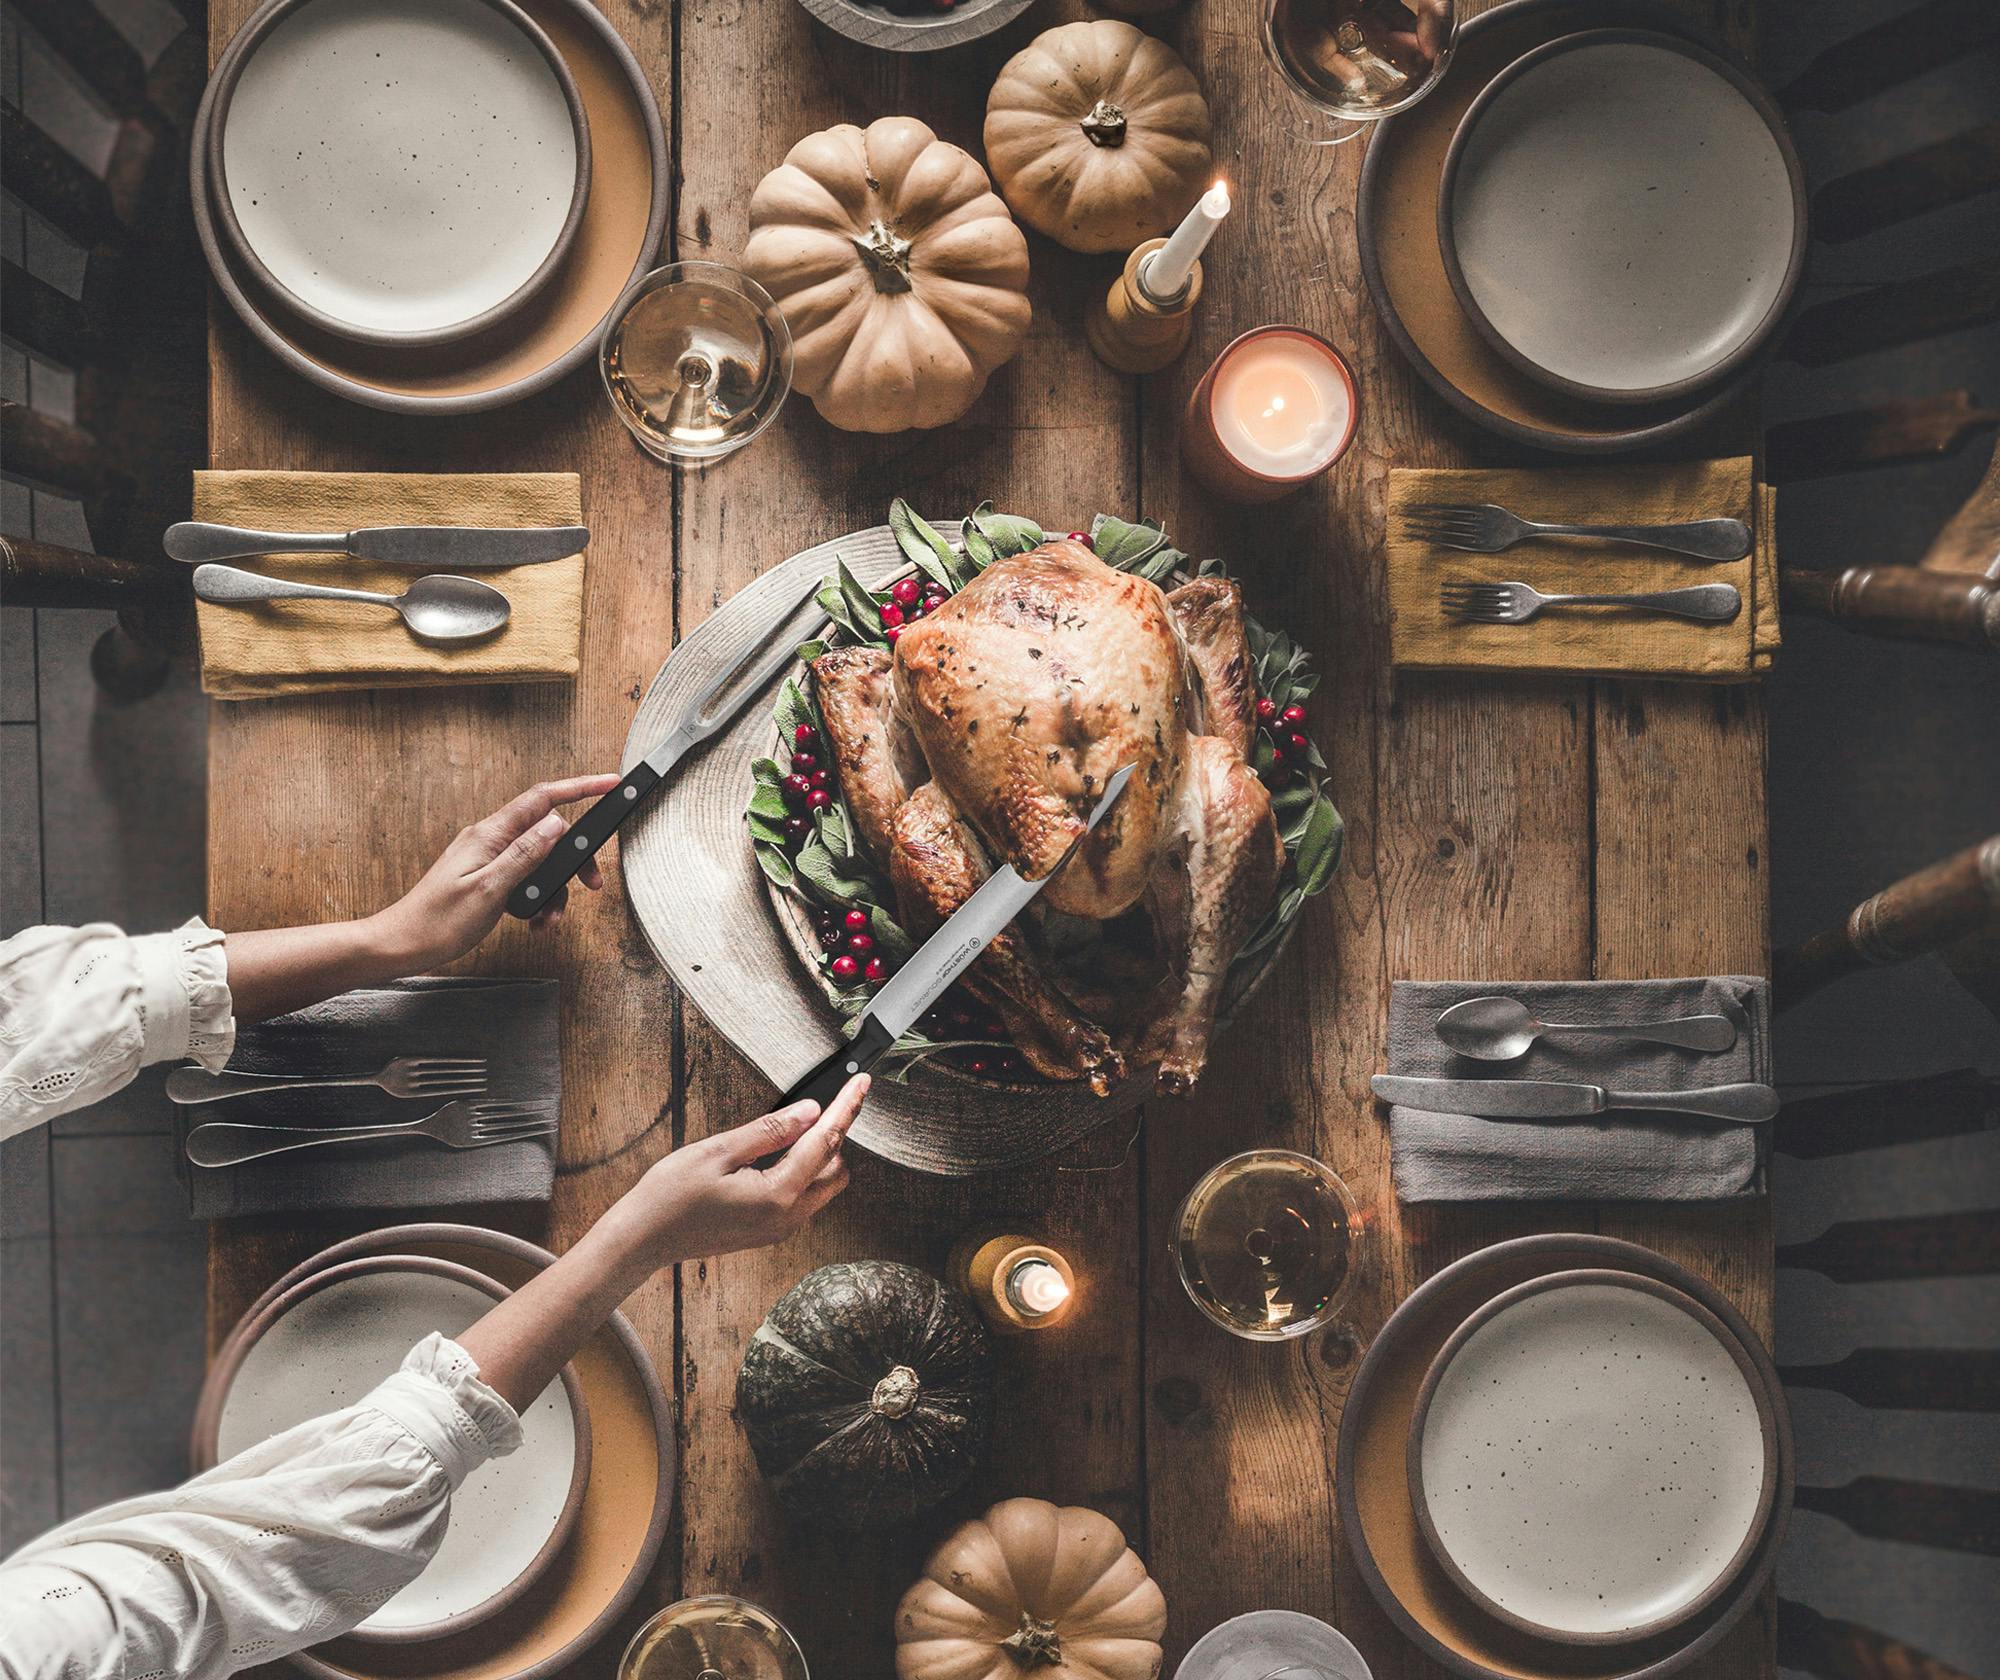 Save 20% on WÜSTHOF hosting essentials for Thanksgiving